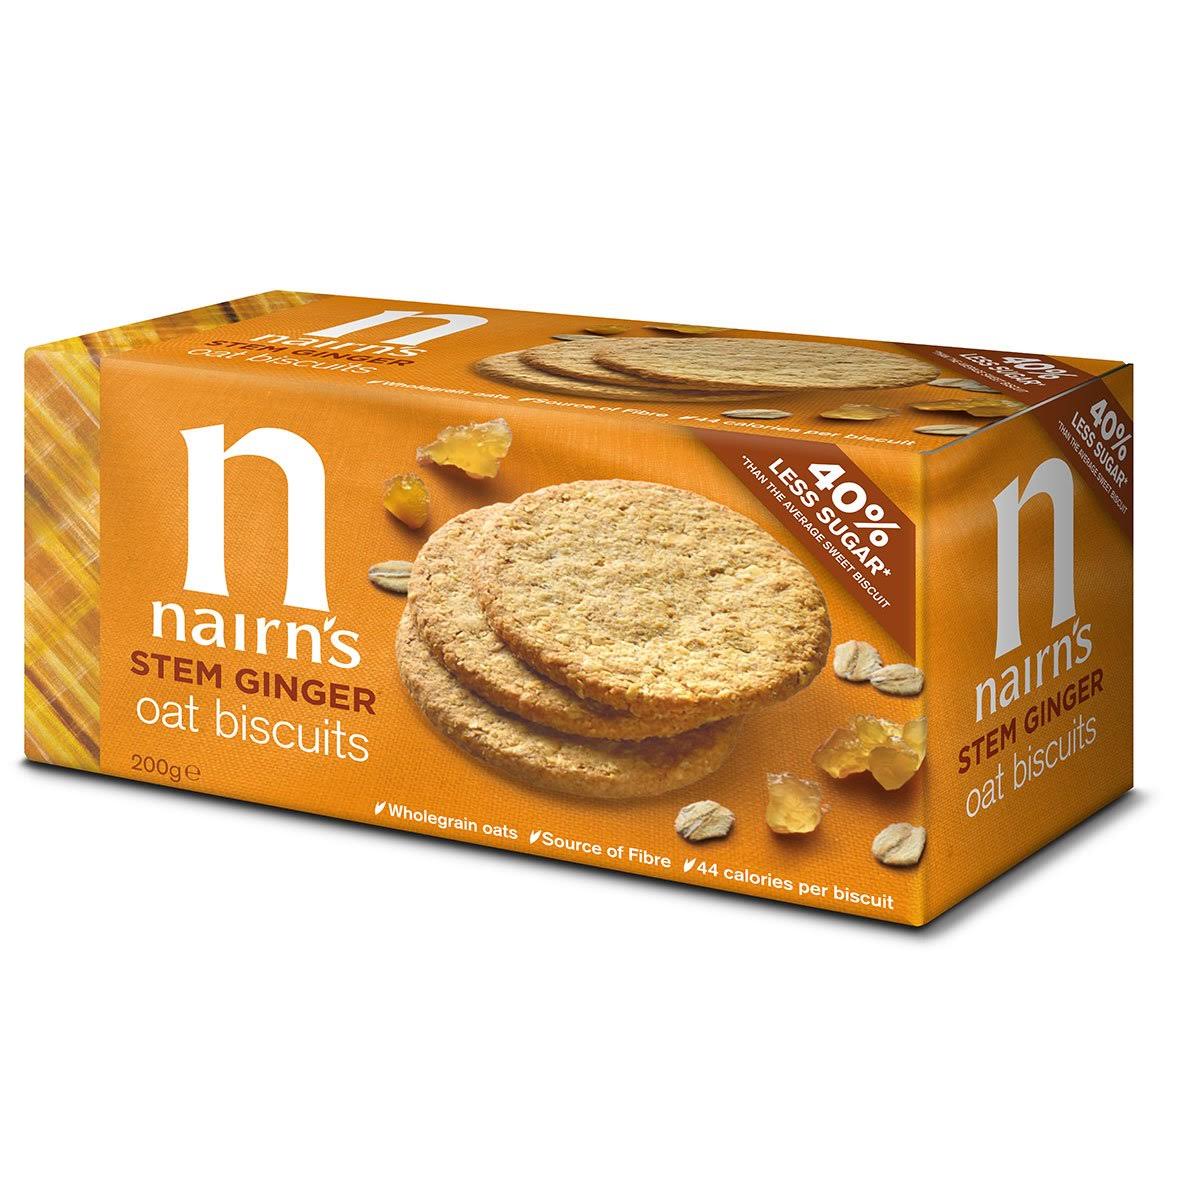 Nairn's Stem Ginger Oat Biscuits - 7.1oz